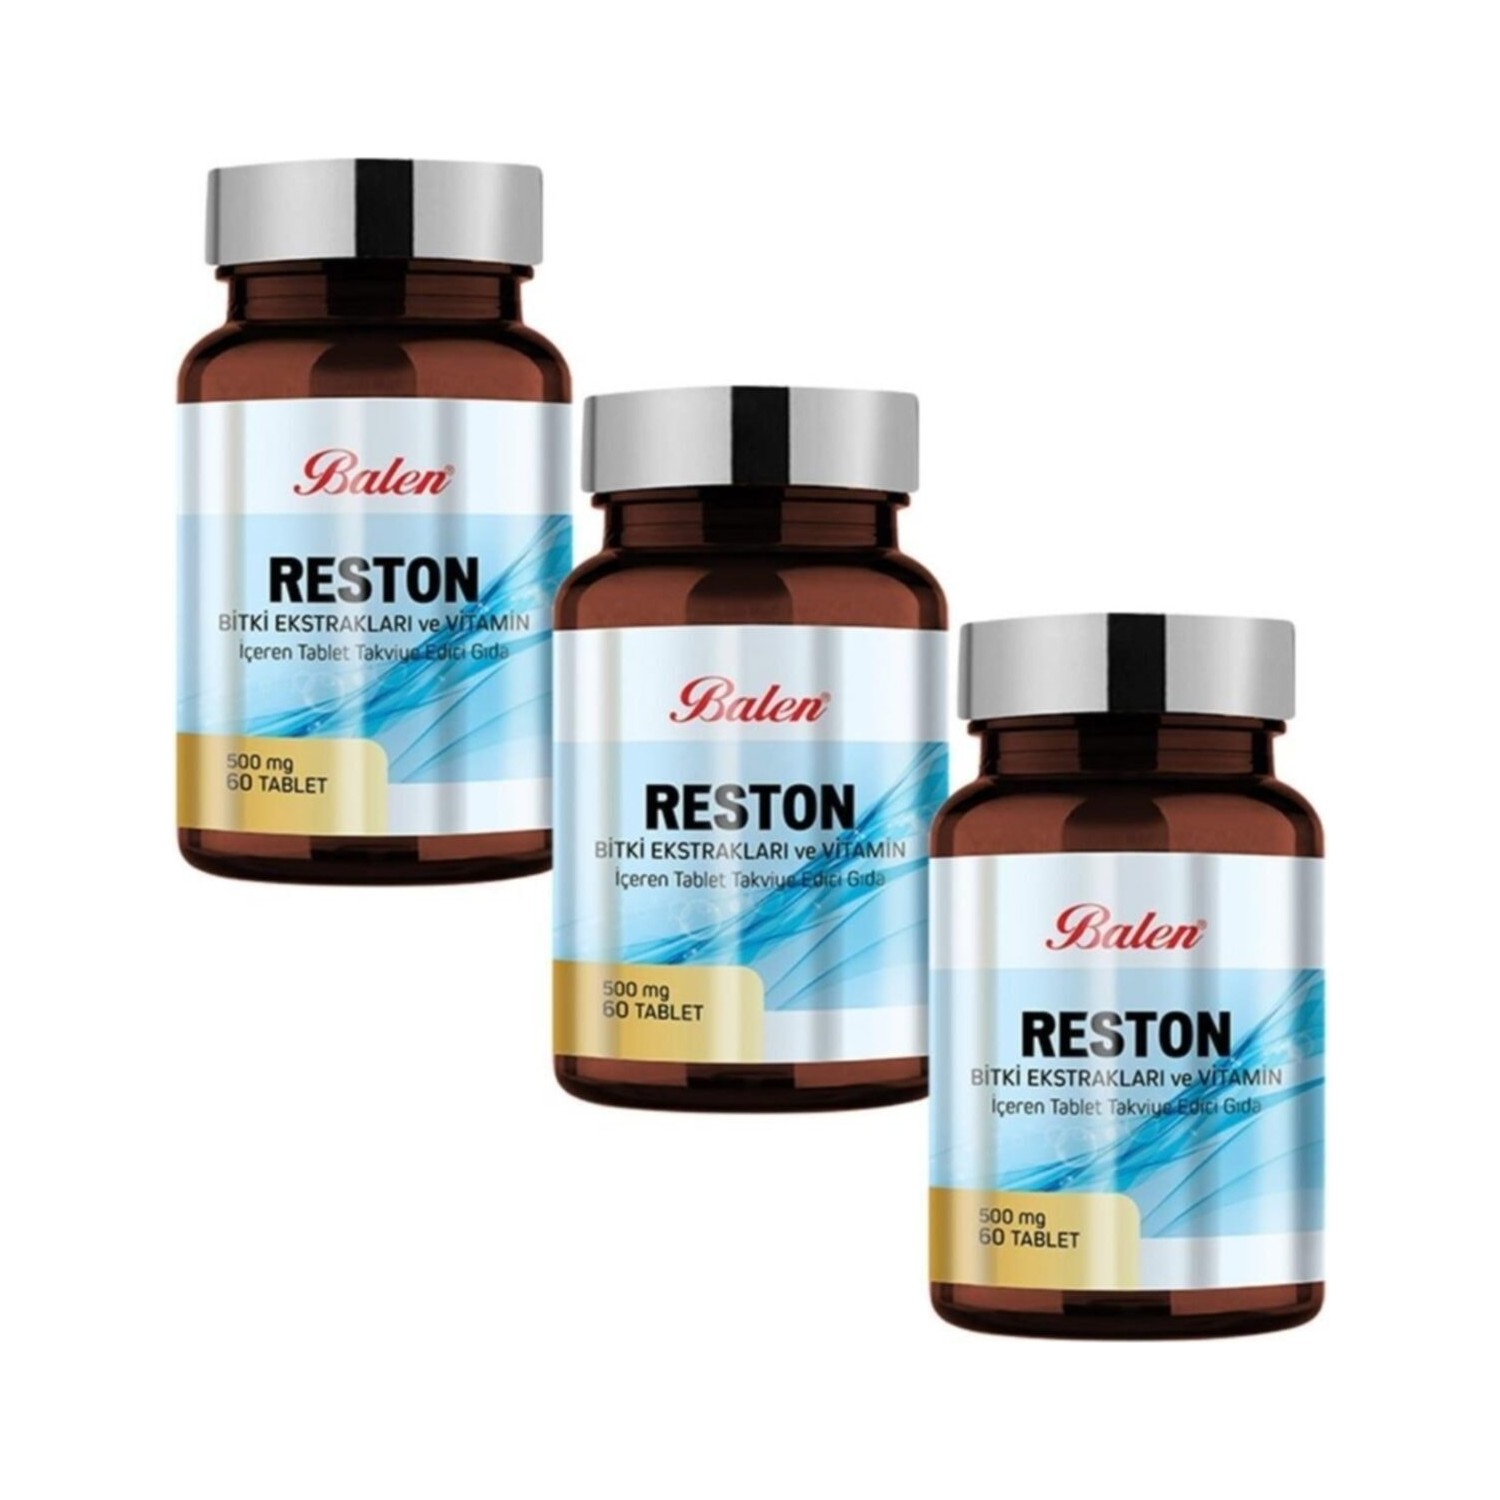 эстер с 500 мг 60 таблетки Пищевая добавка Balen Reston 500 мг, 3 упаковки по 60 капсул